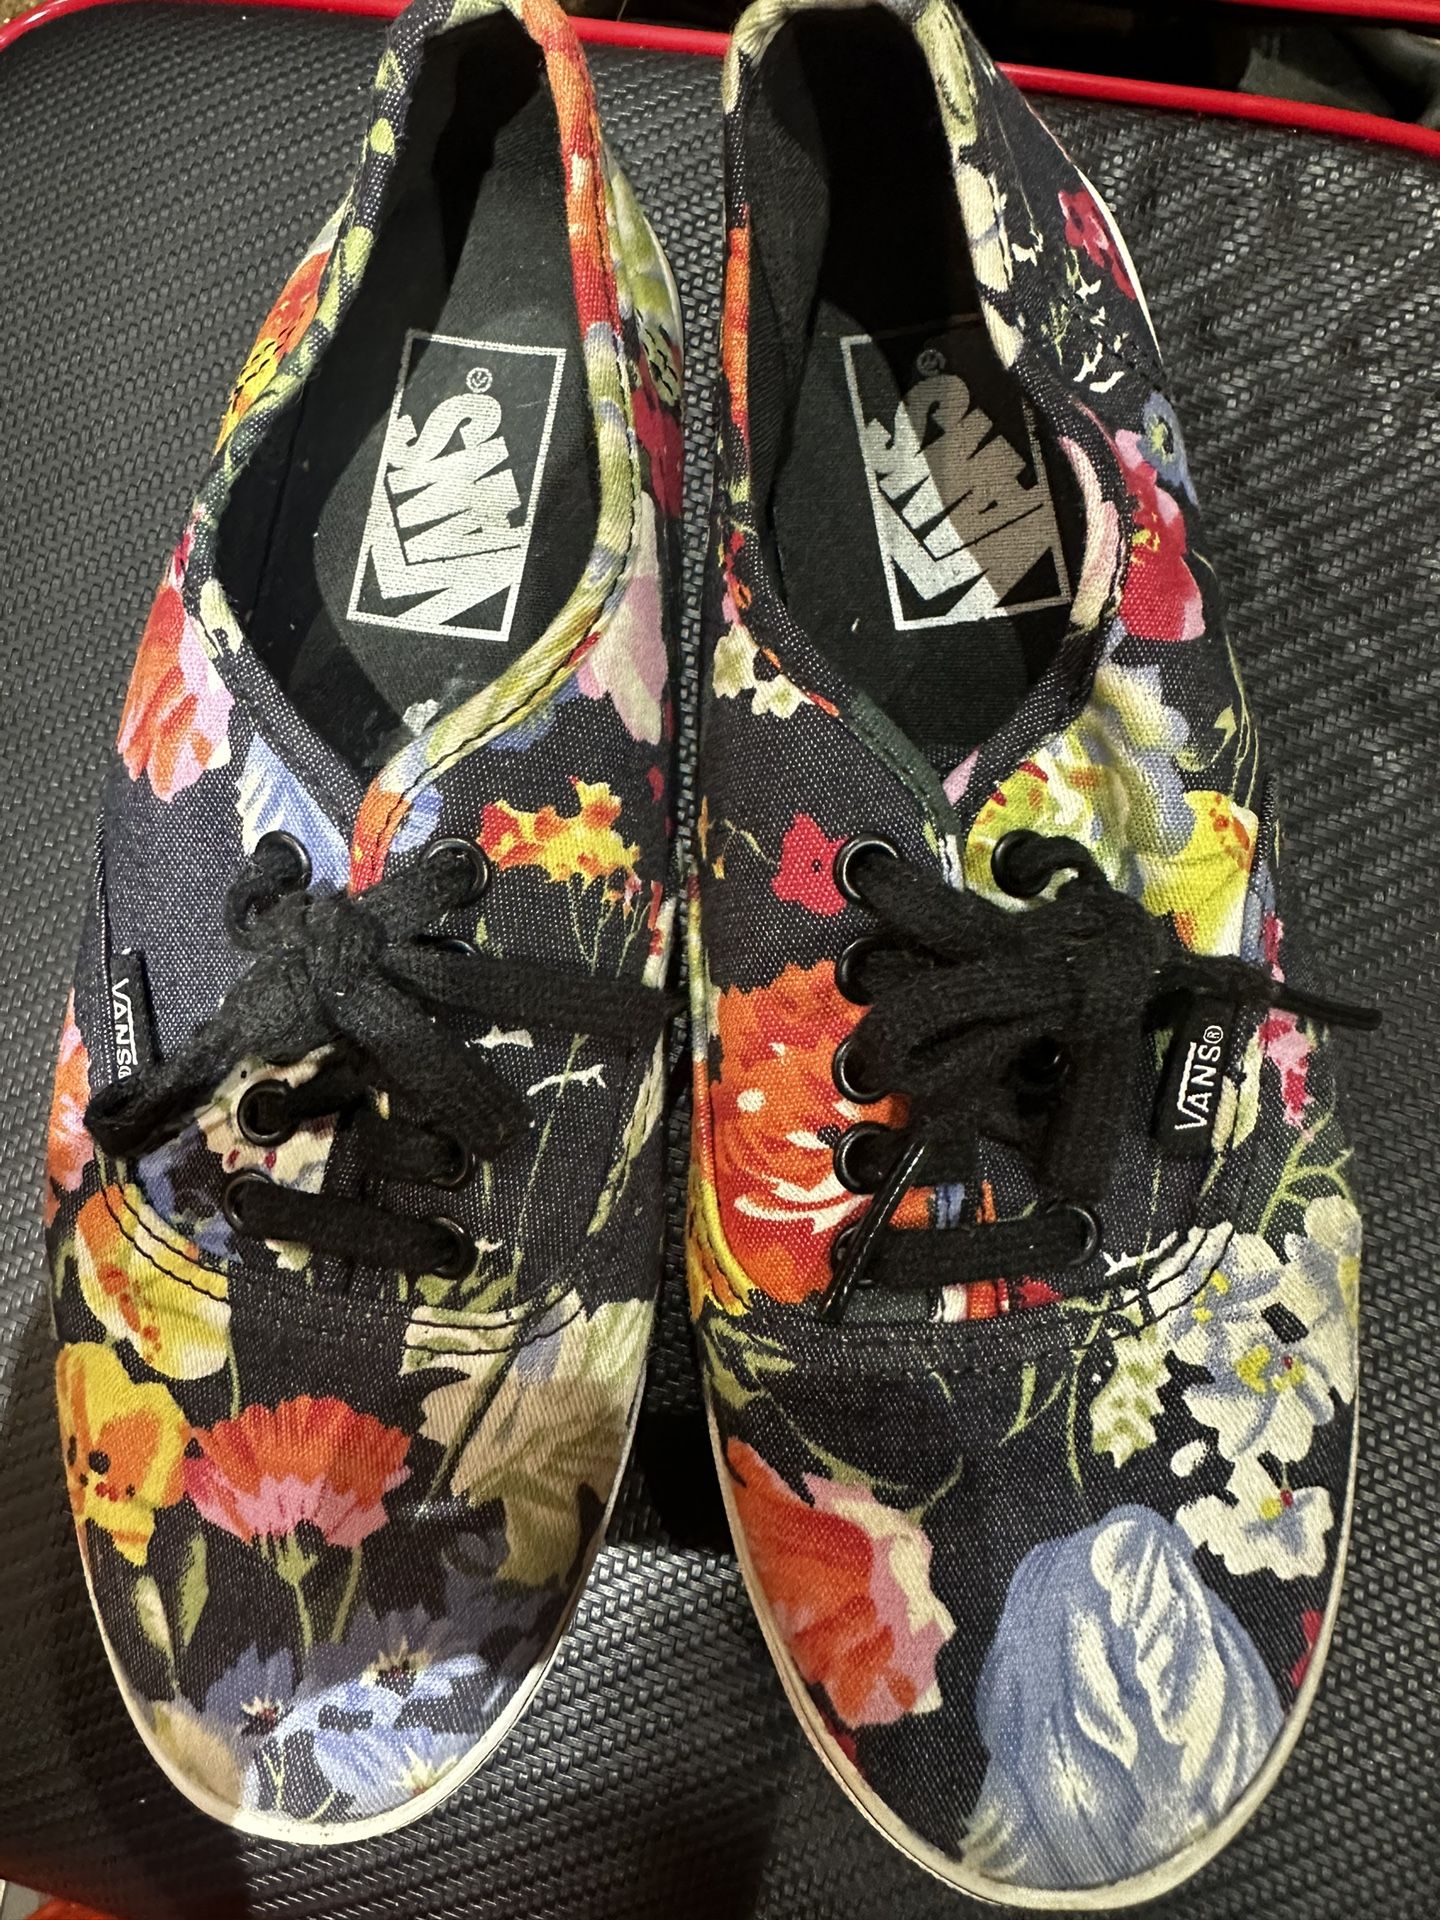 Vans Flowered Sneakers - Size 6 Woman’s 